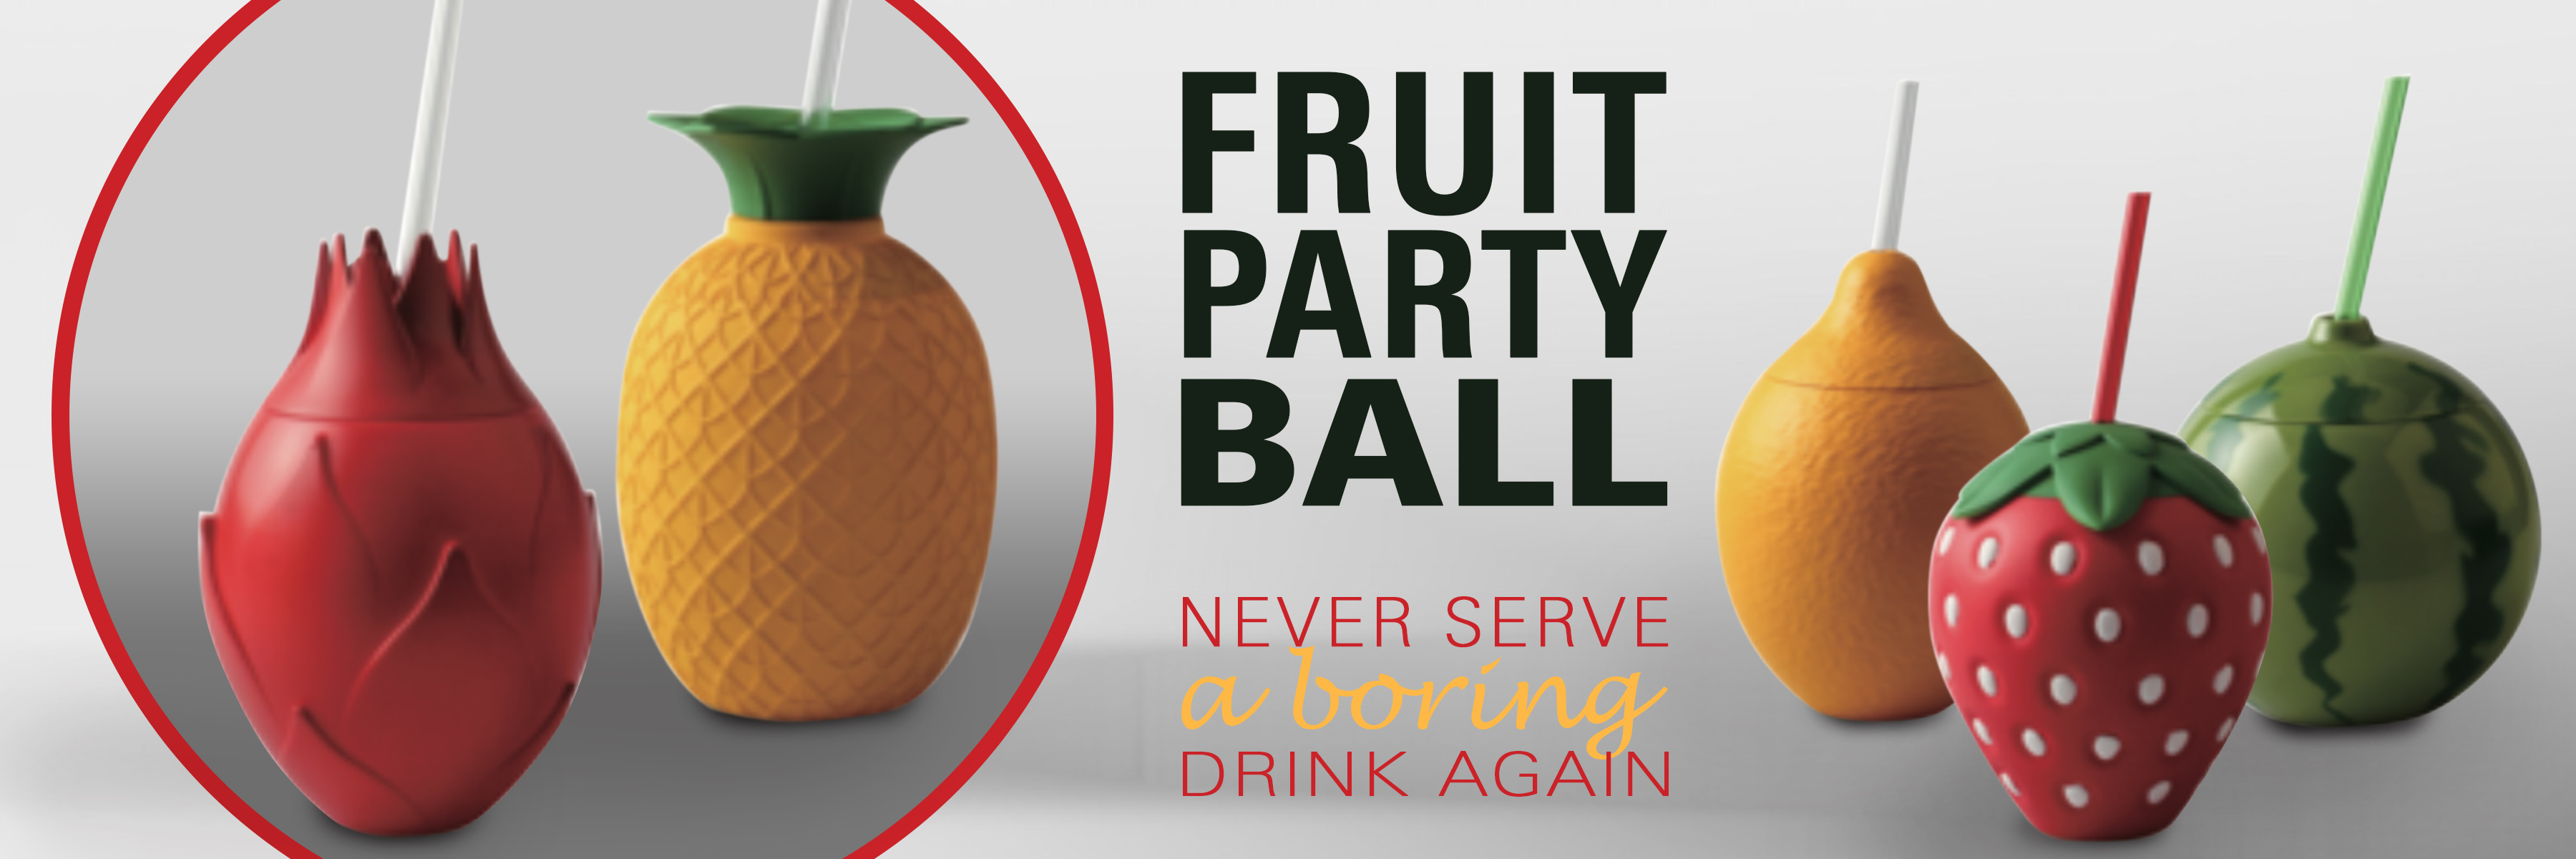 fruit party balls banner